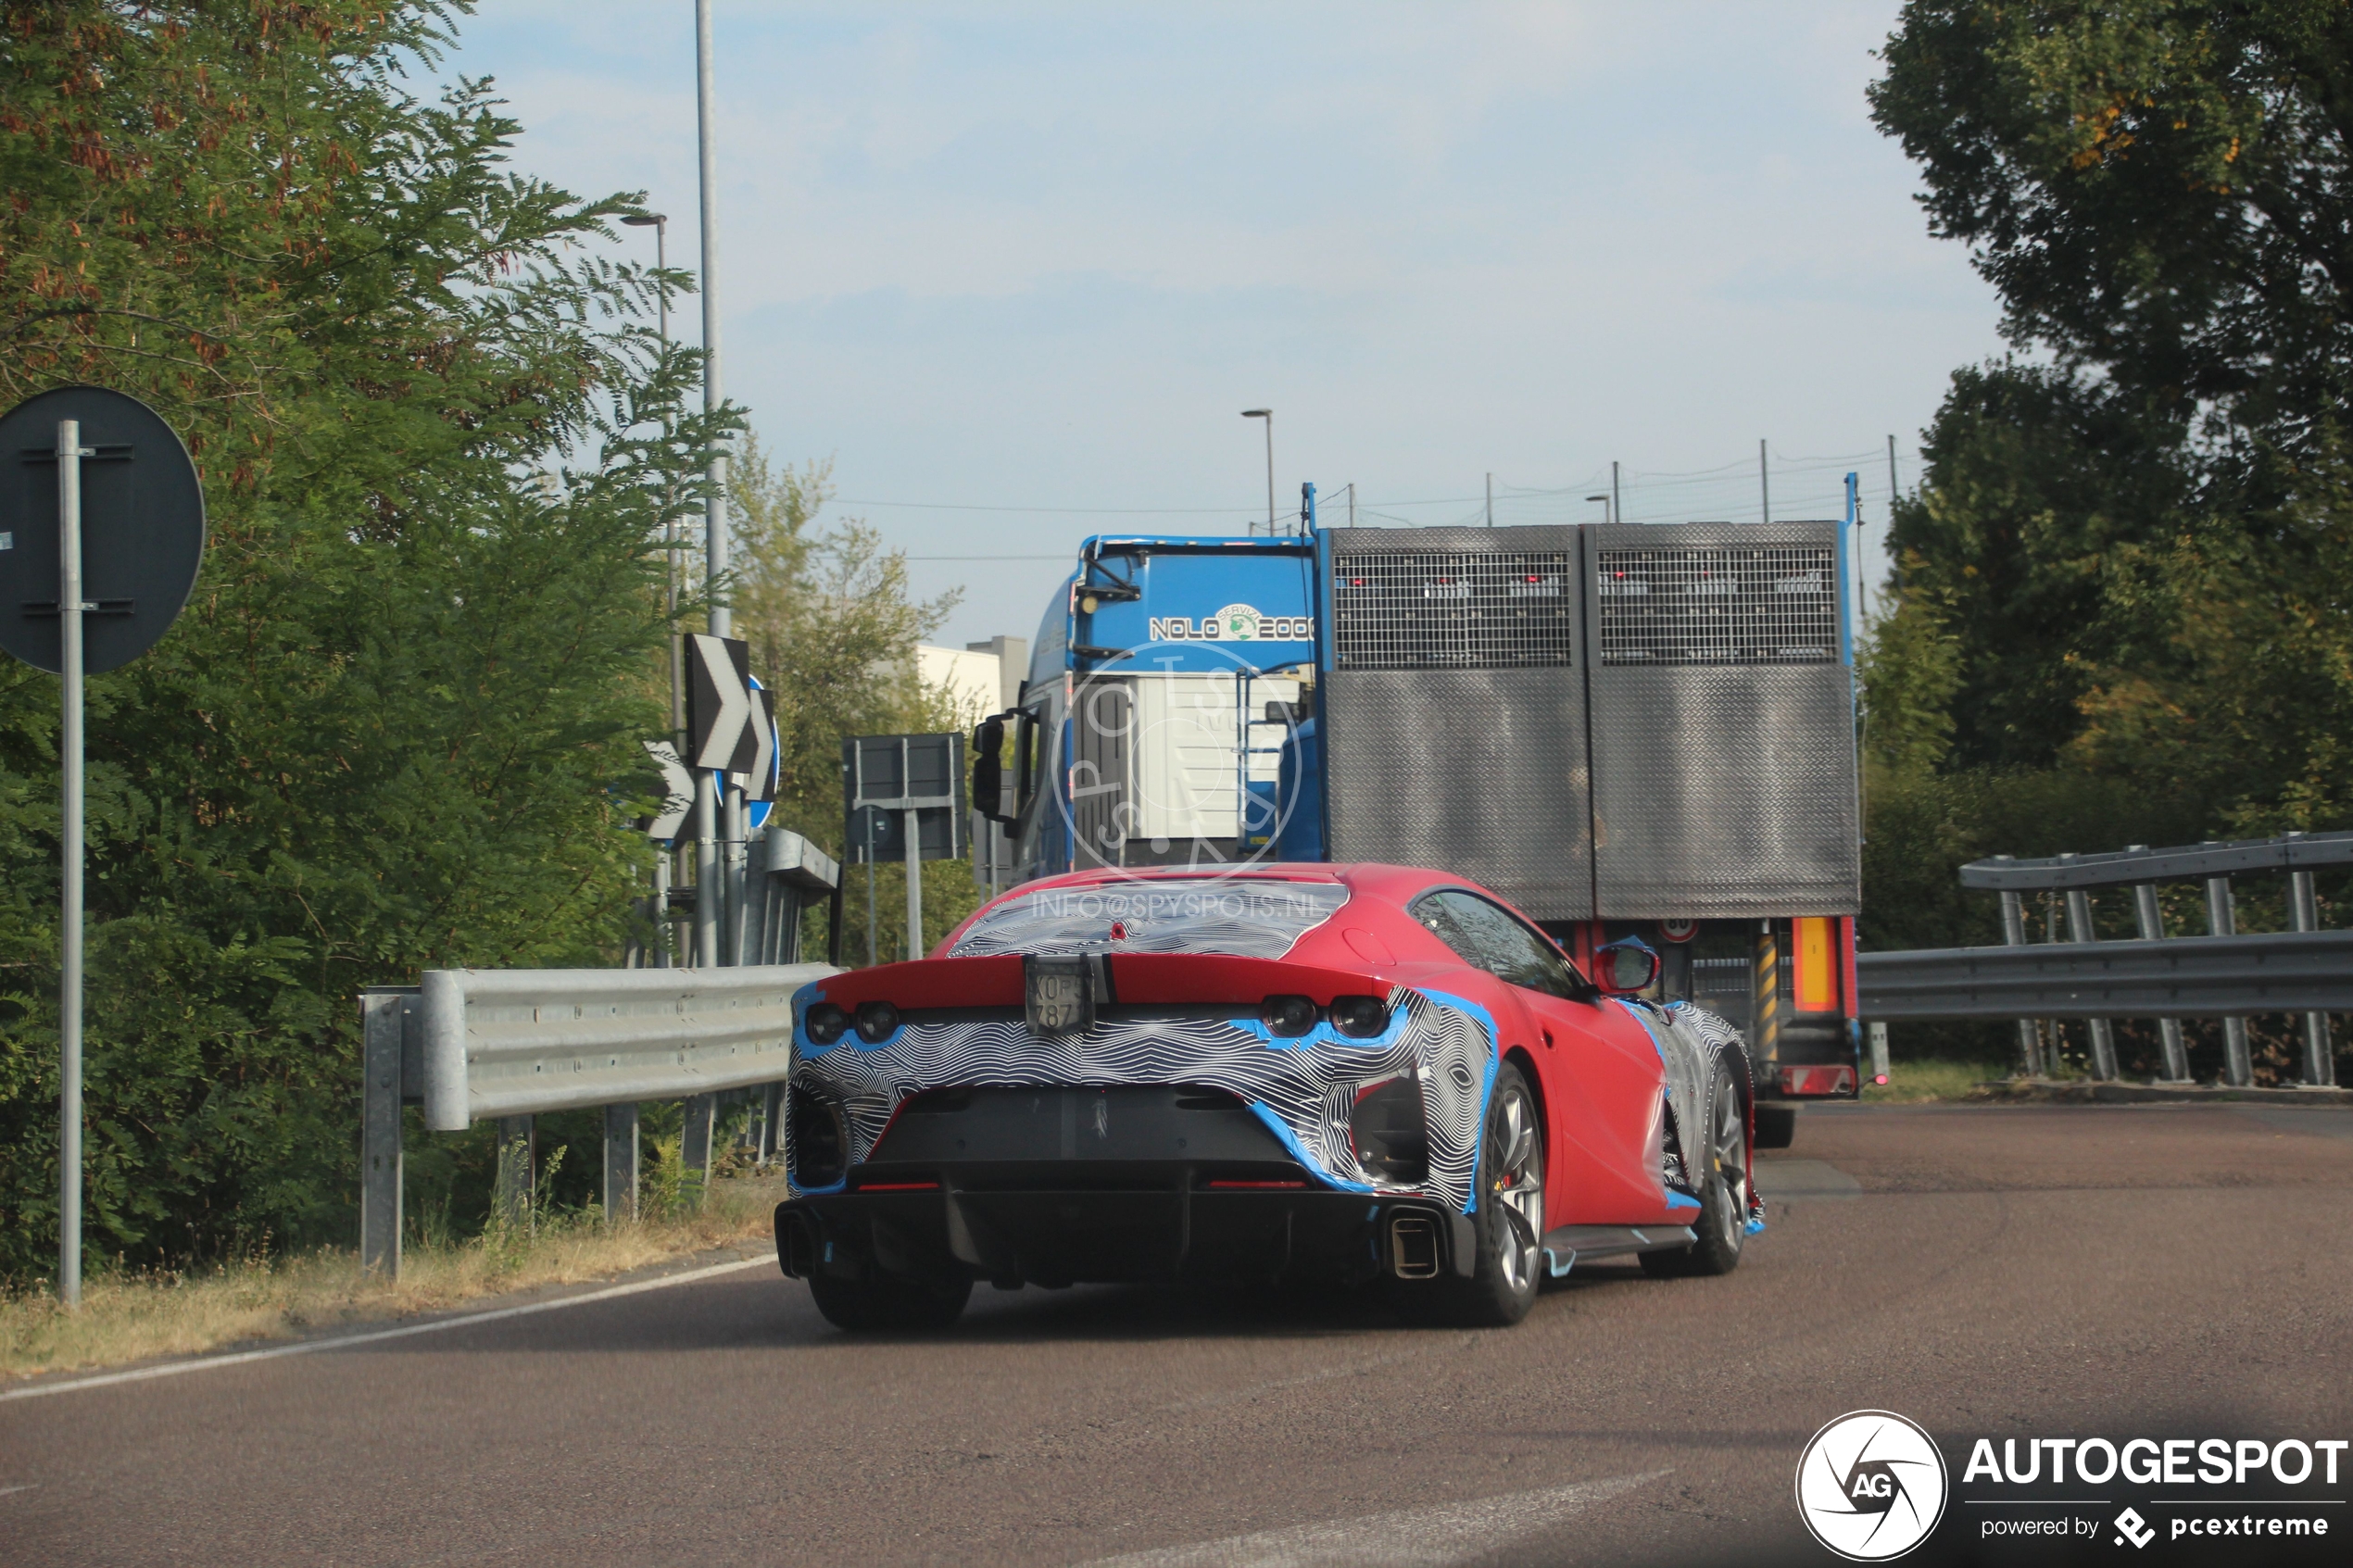 Sneak peek: Ferrari 12Cilindri Spider spotted under wraps